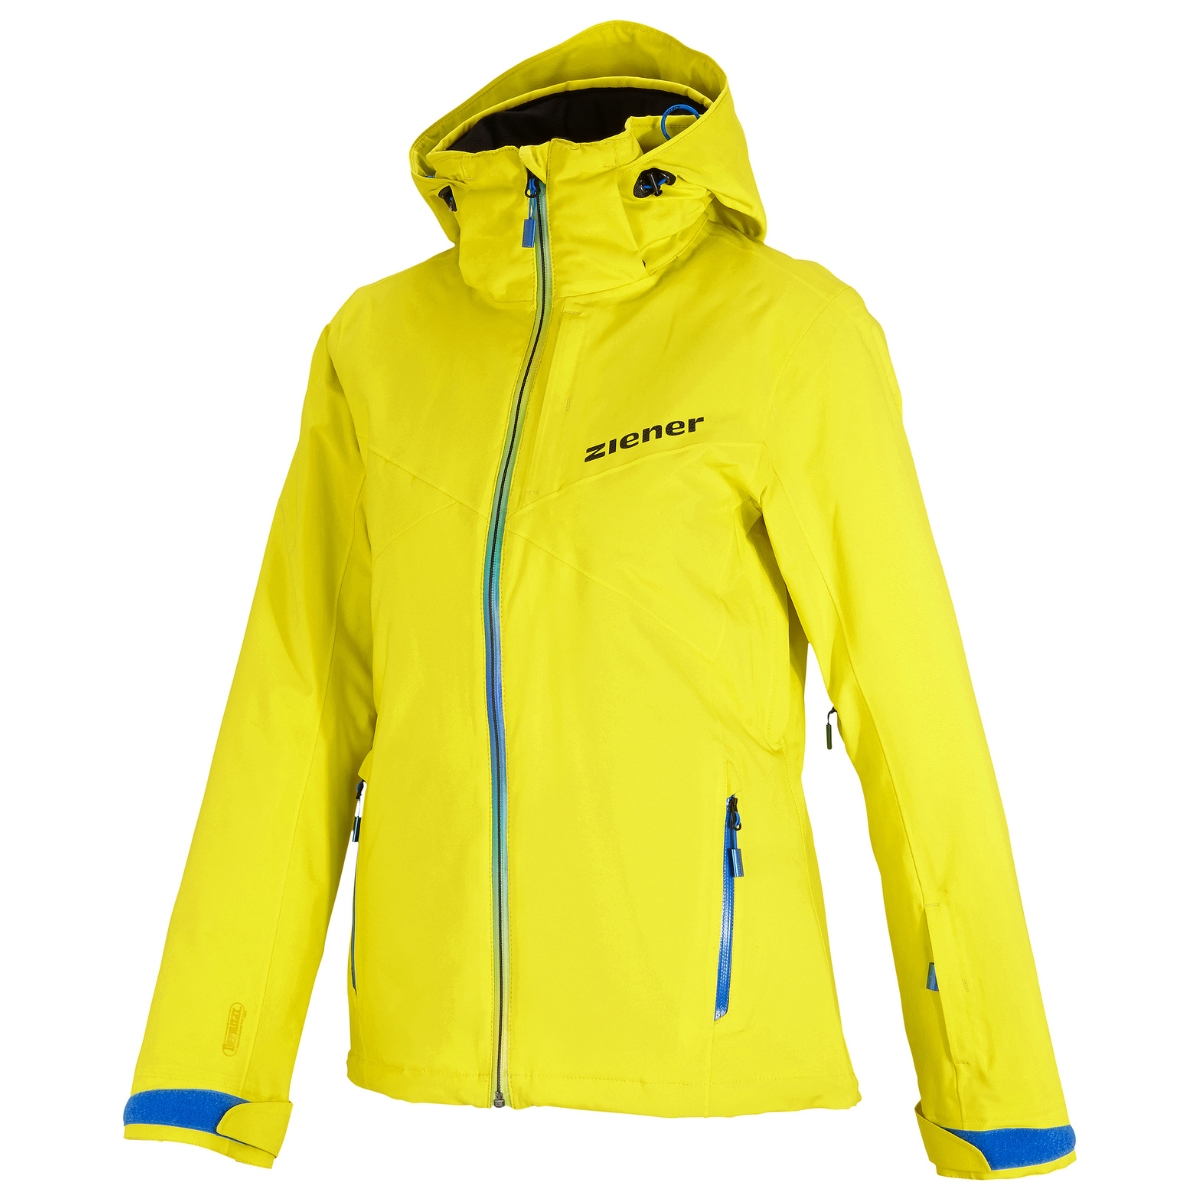 Ziener Damen Skijacke Modell Toja Lady Teamwear mit DERMIZAX® -Membran Art. 184921_672992 yellow blue shade